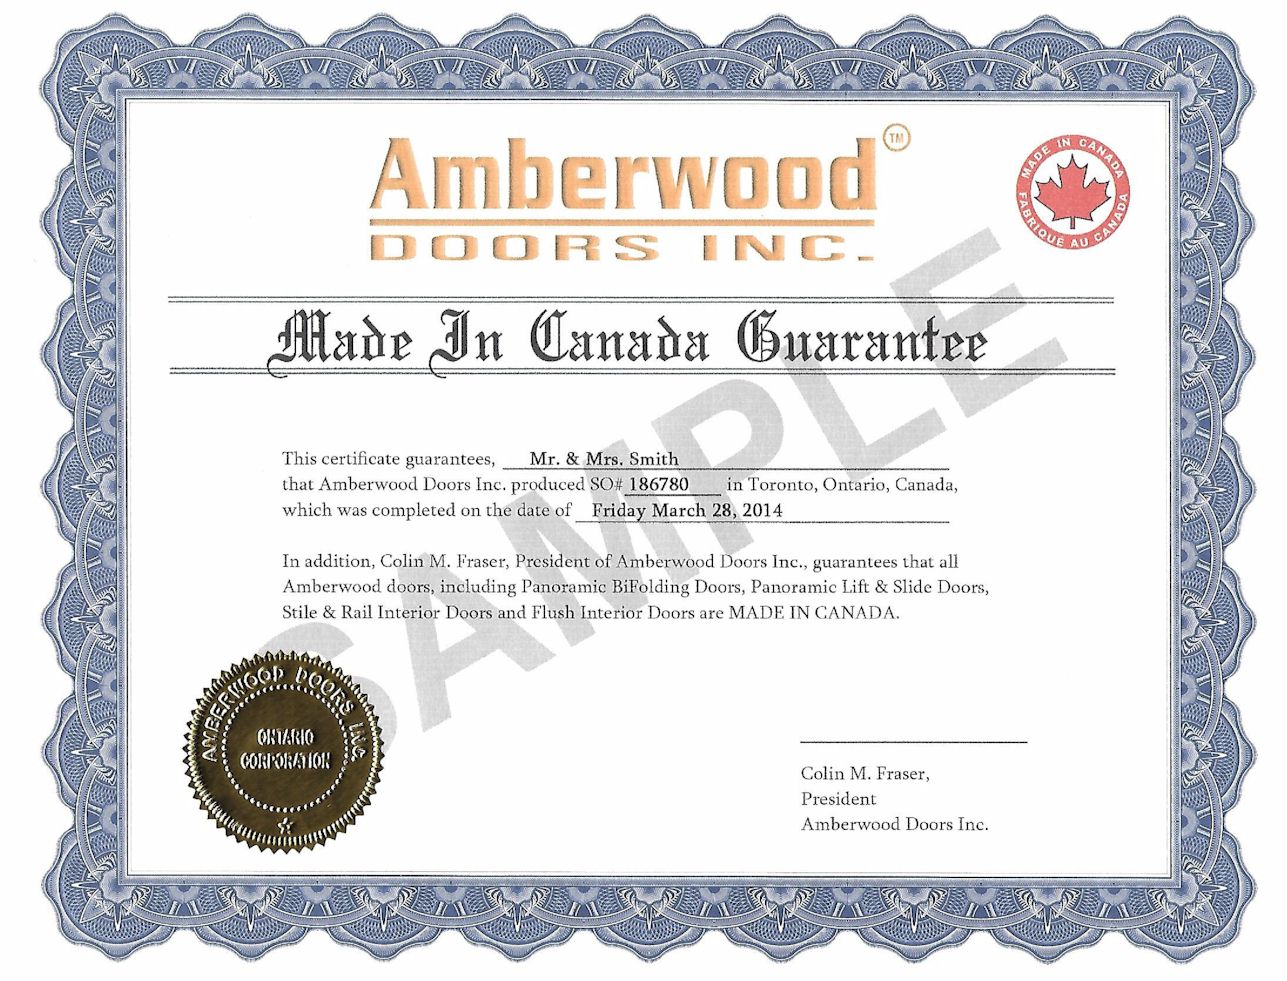 Amberwood Doors made in Canada guarantee